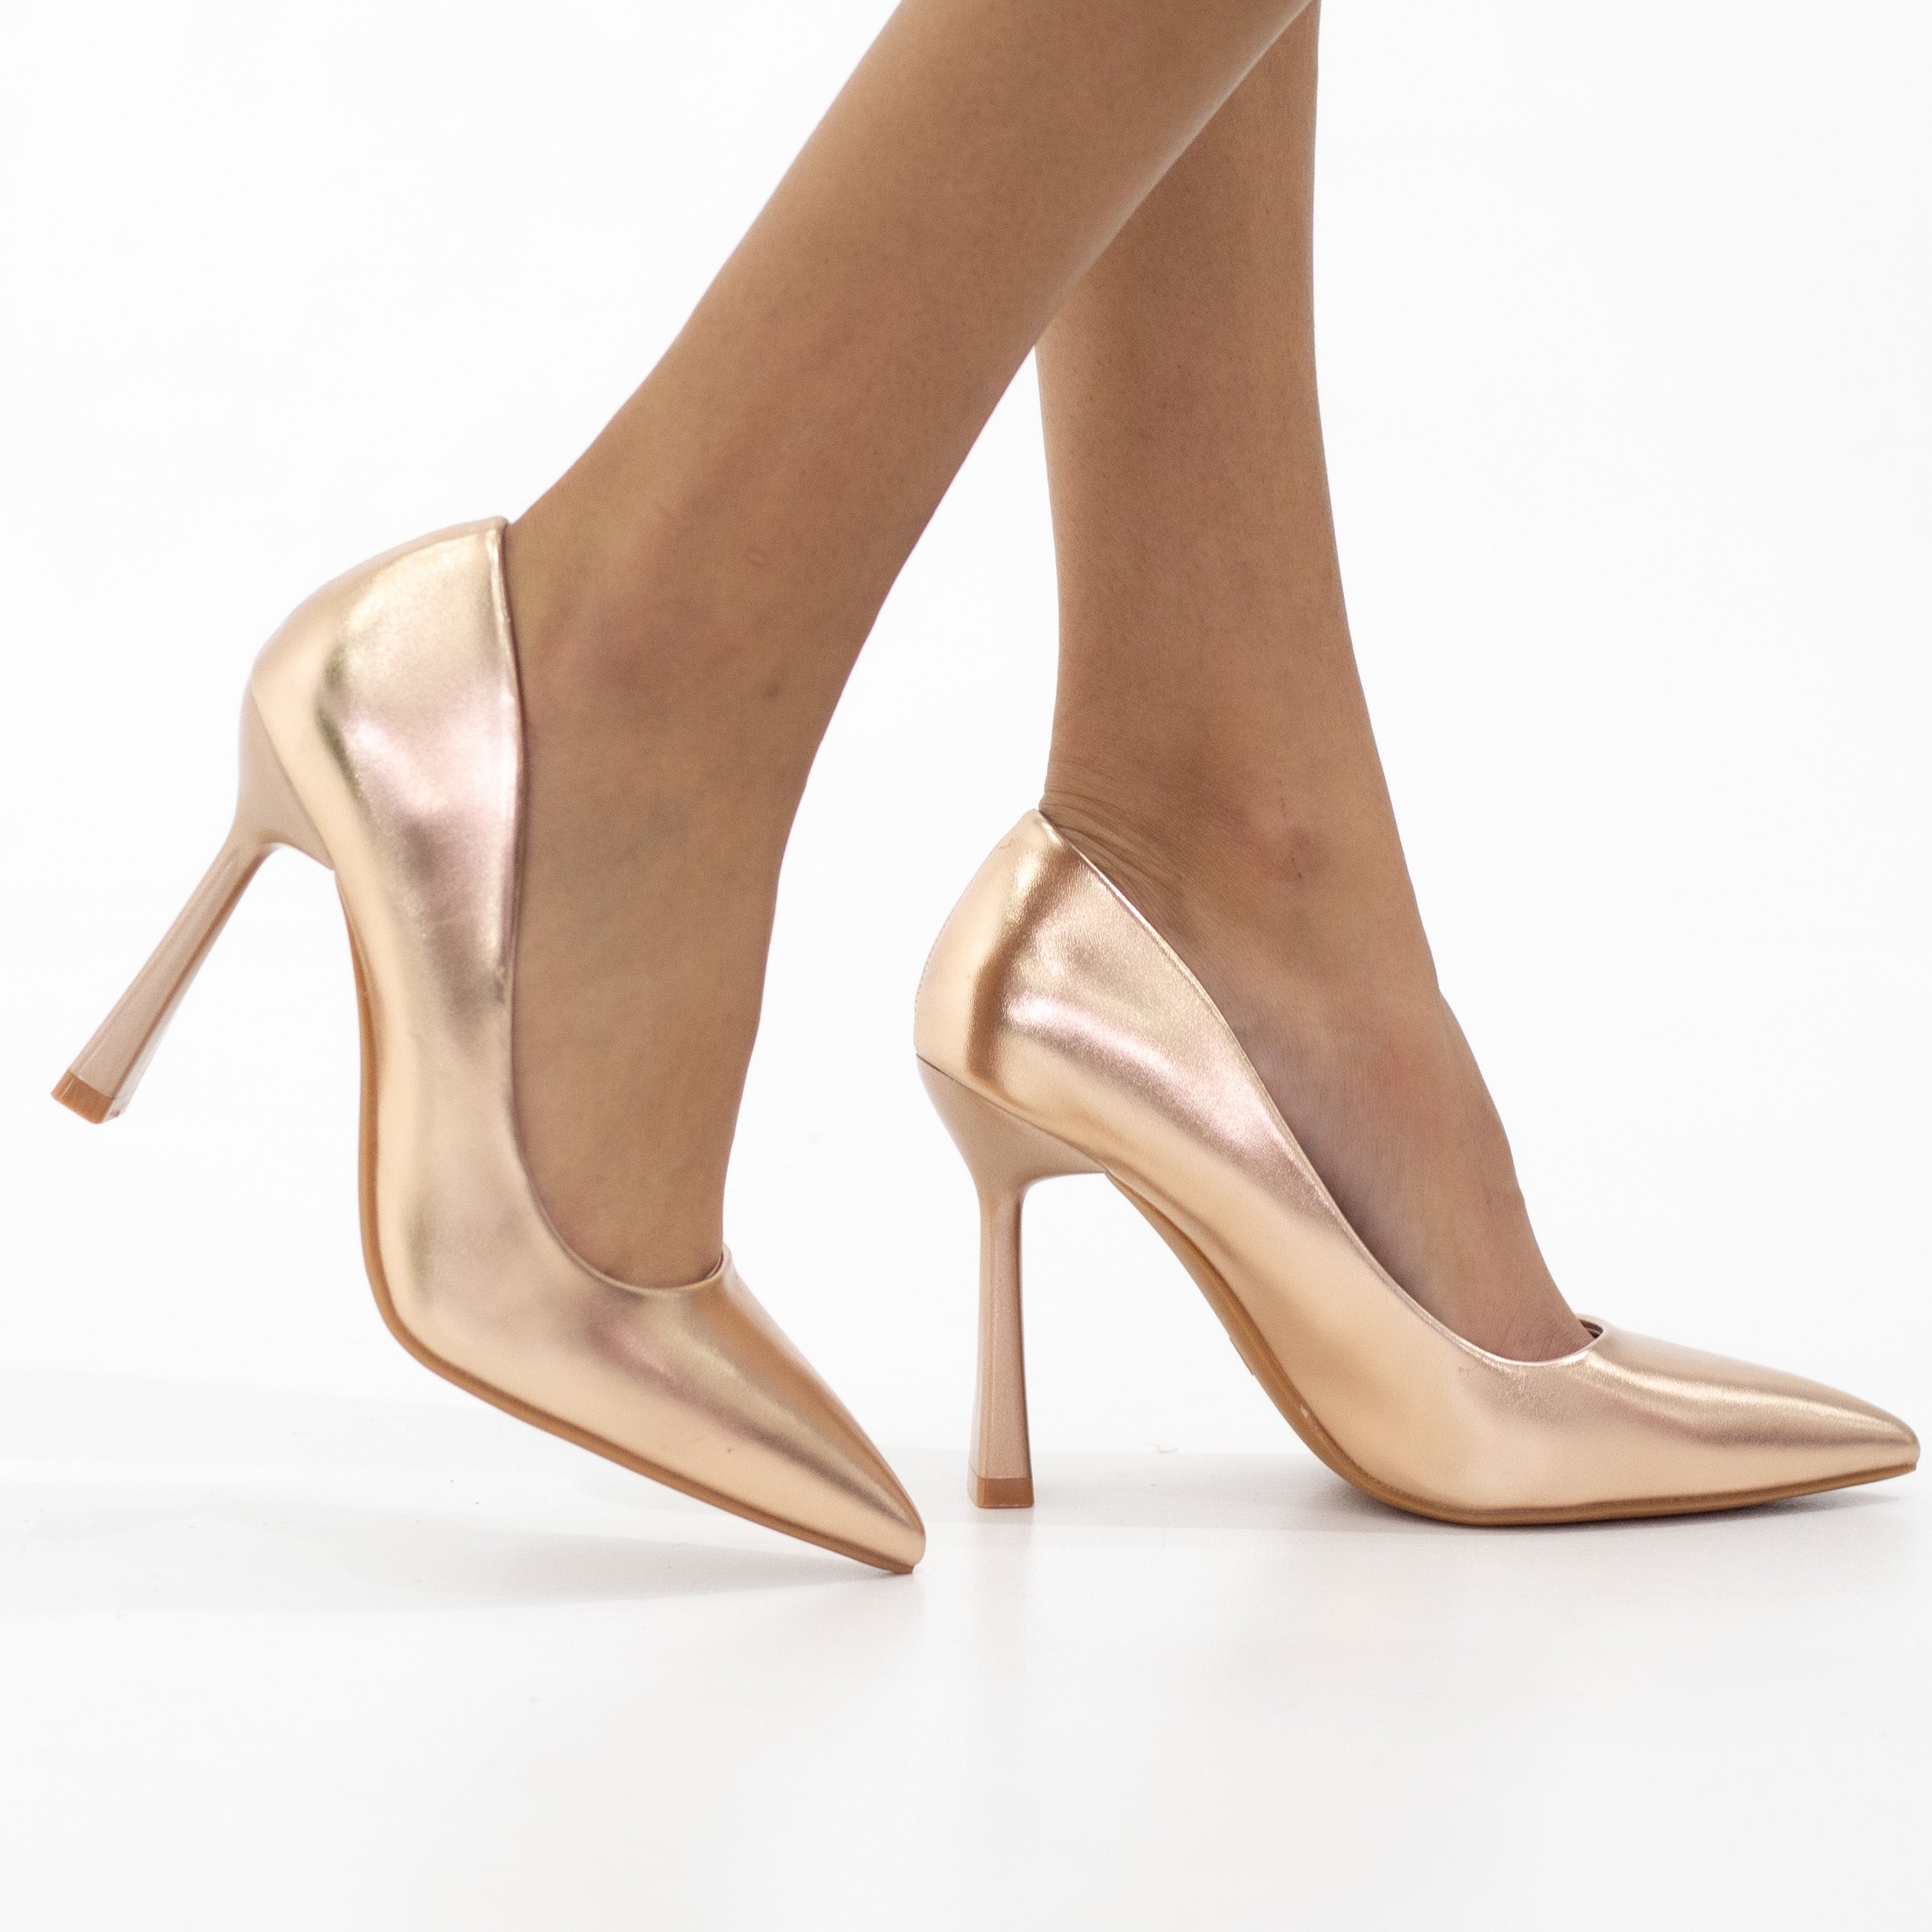 Rose gold 10cm sleek stiletto heel court shoes june